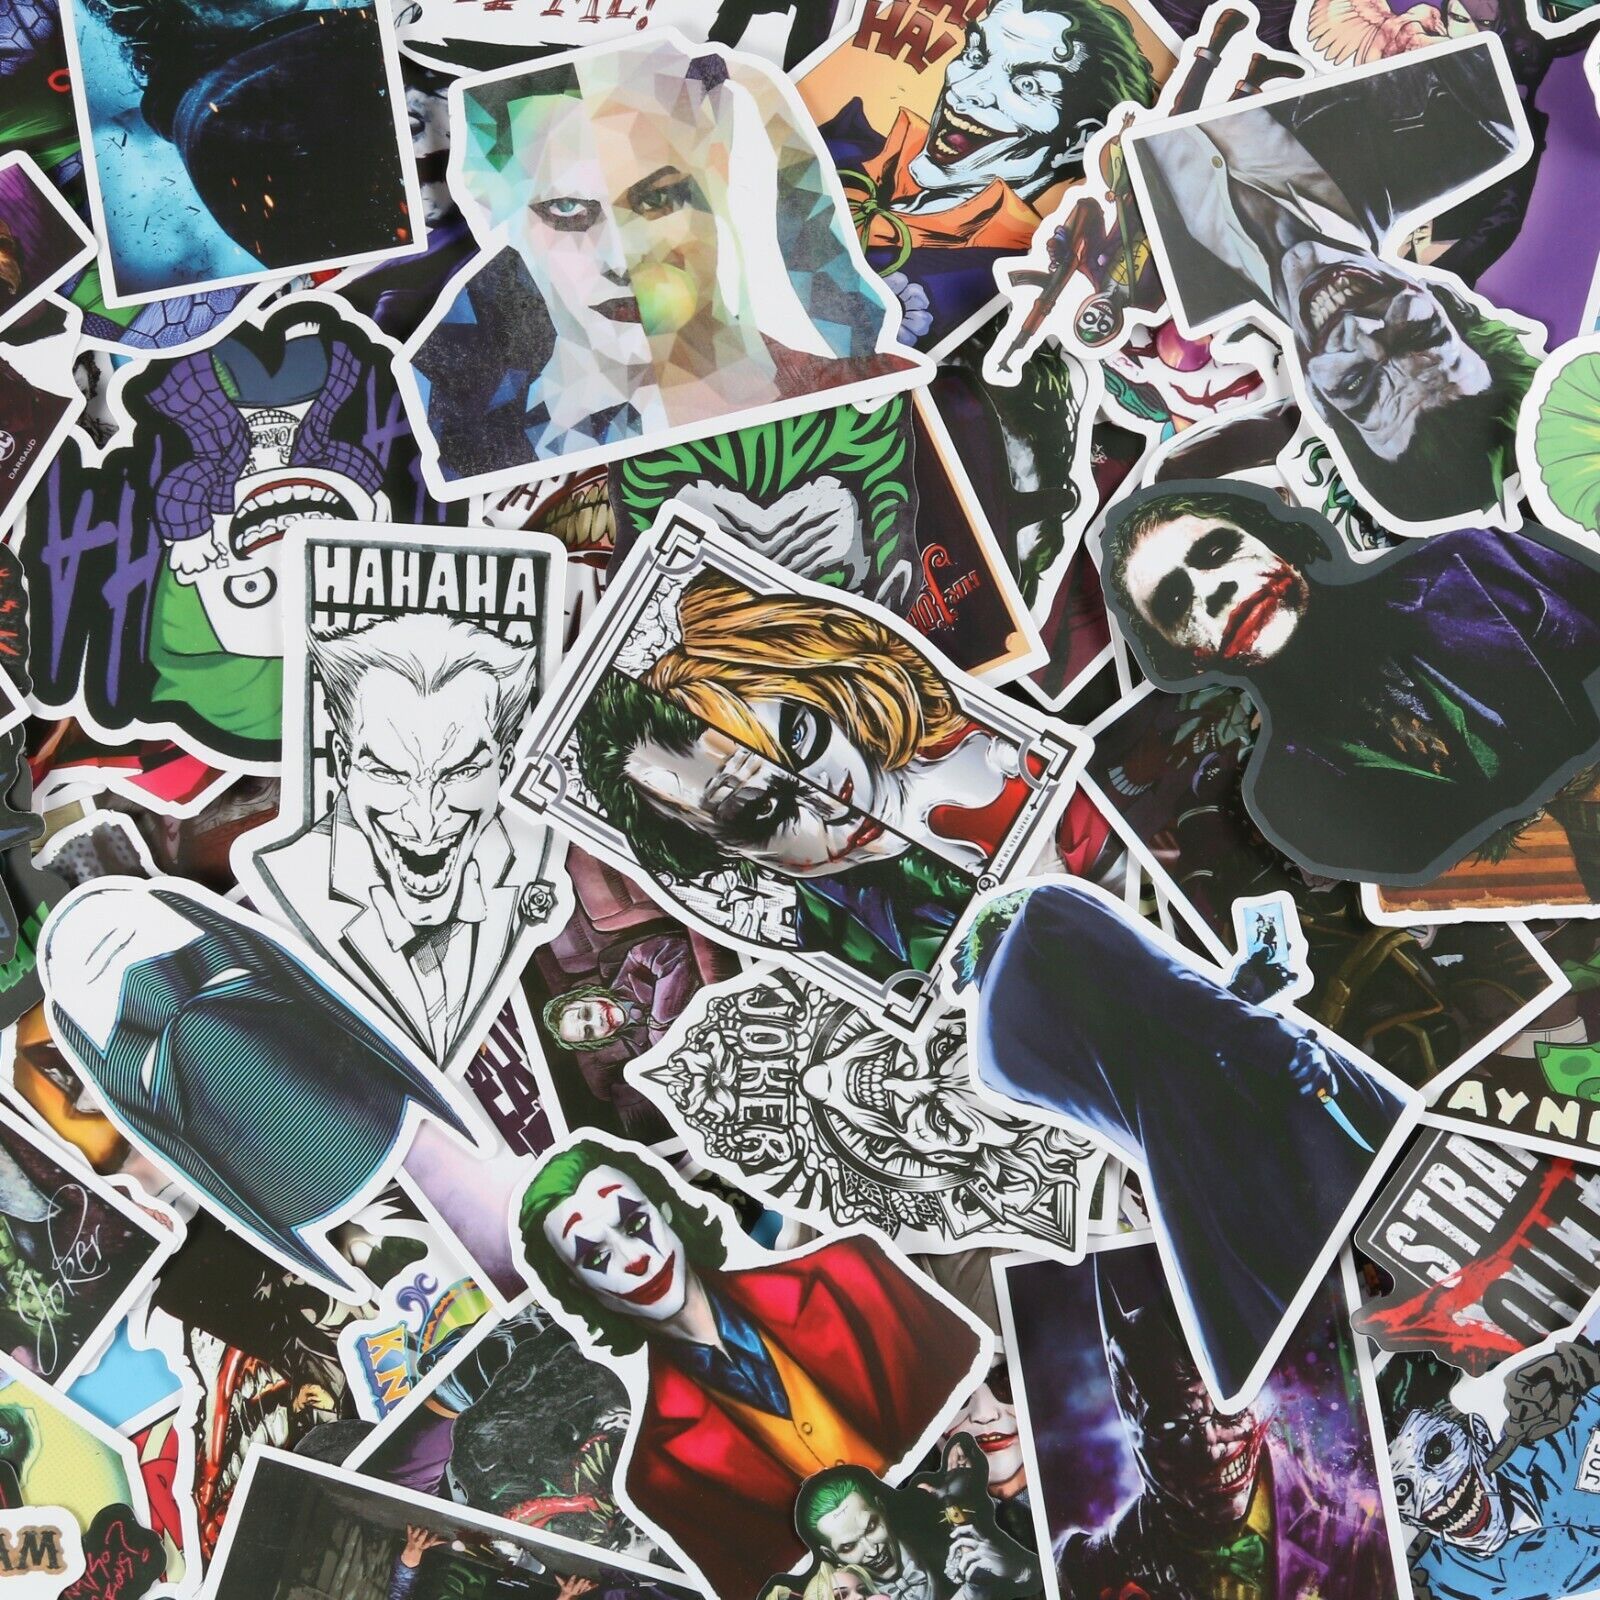 100pcs JOKER stickers pack, DC comics movie Clown Joker stickers